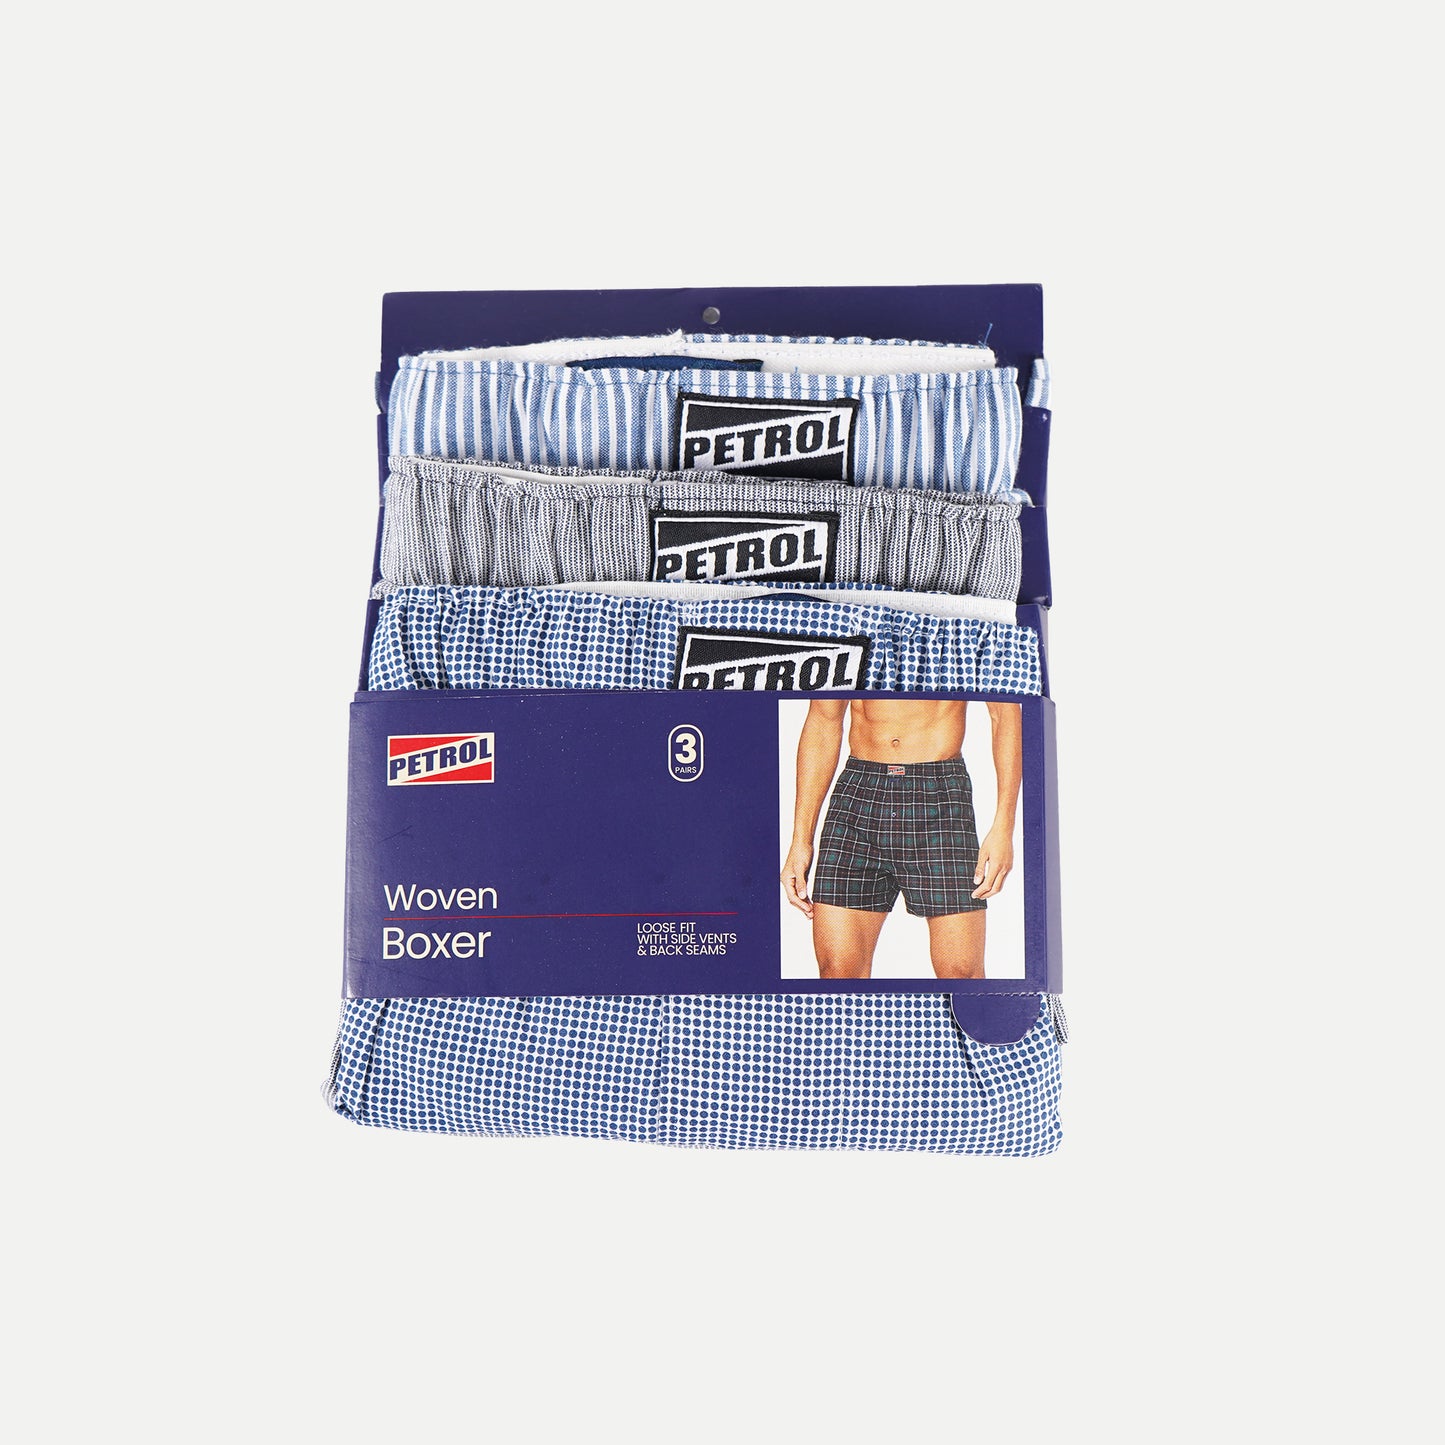 Petrol Men's Basic Accessories 3in1 Innerwear Cotton Fabric 3pcs Set Assorted 100% Premium Cotton Woven Boxer short for Men 113943 (Assorted)